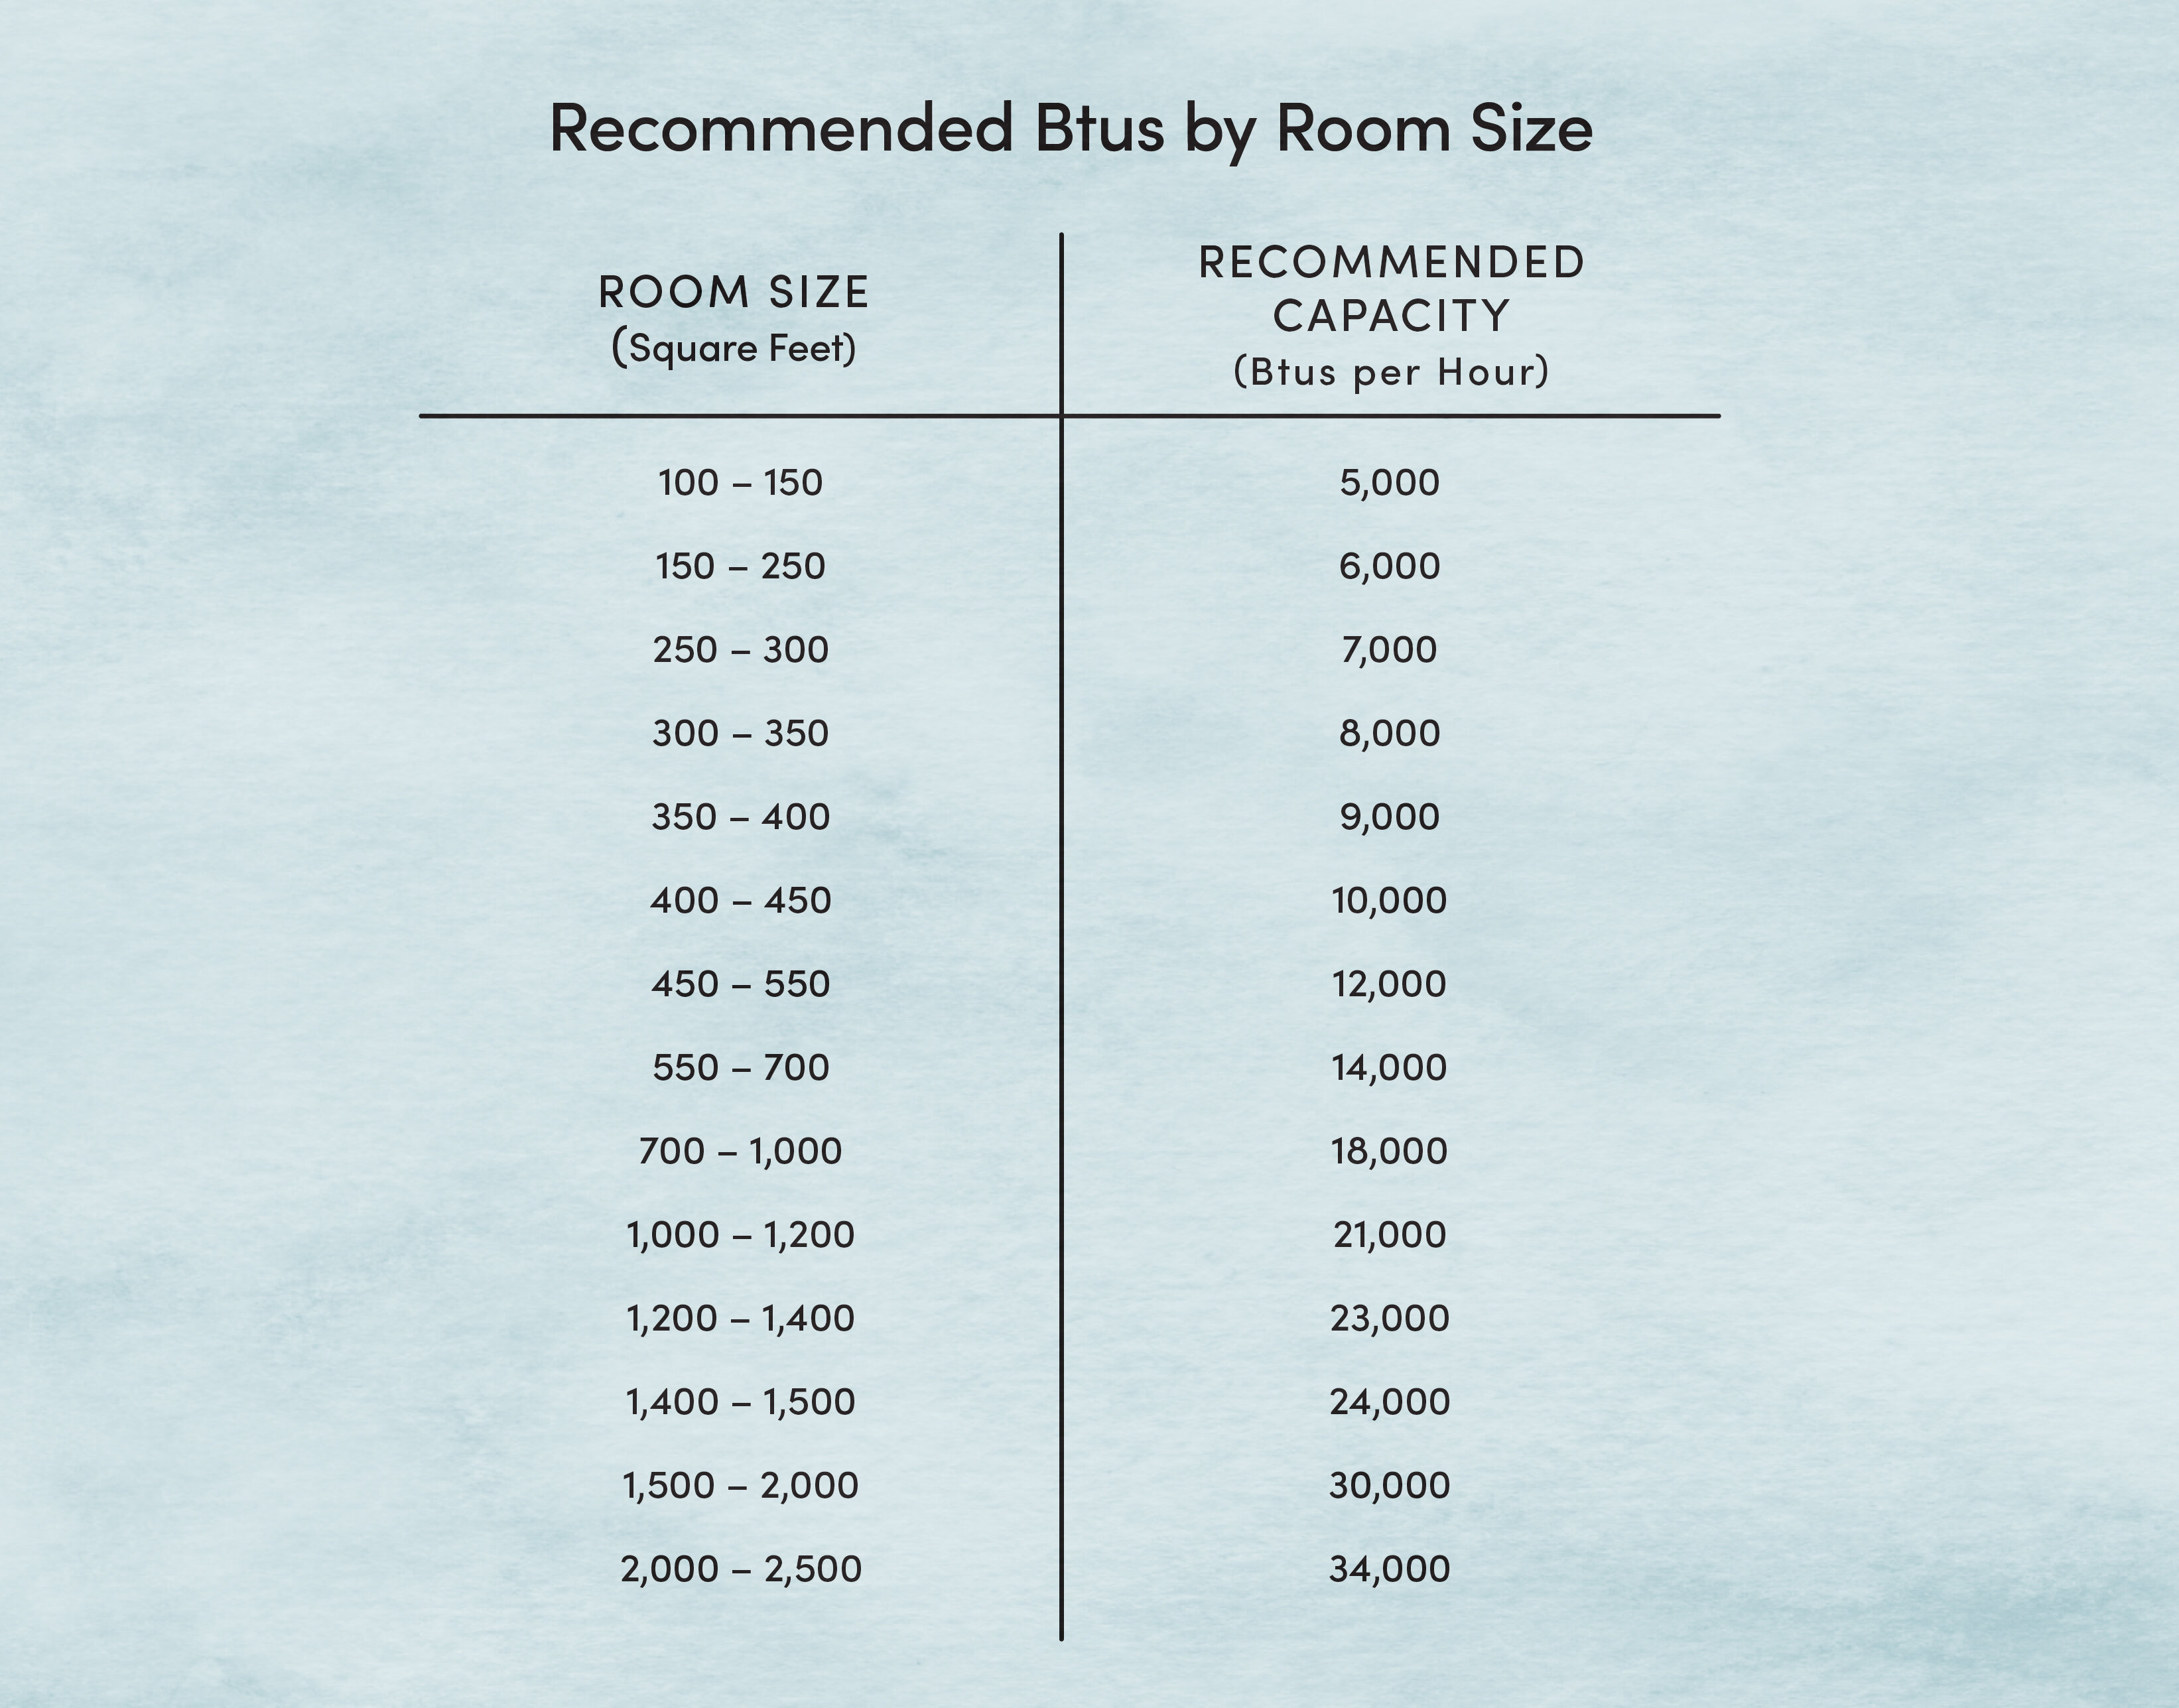 14000 btu room size